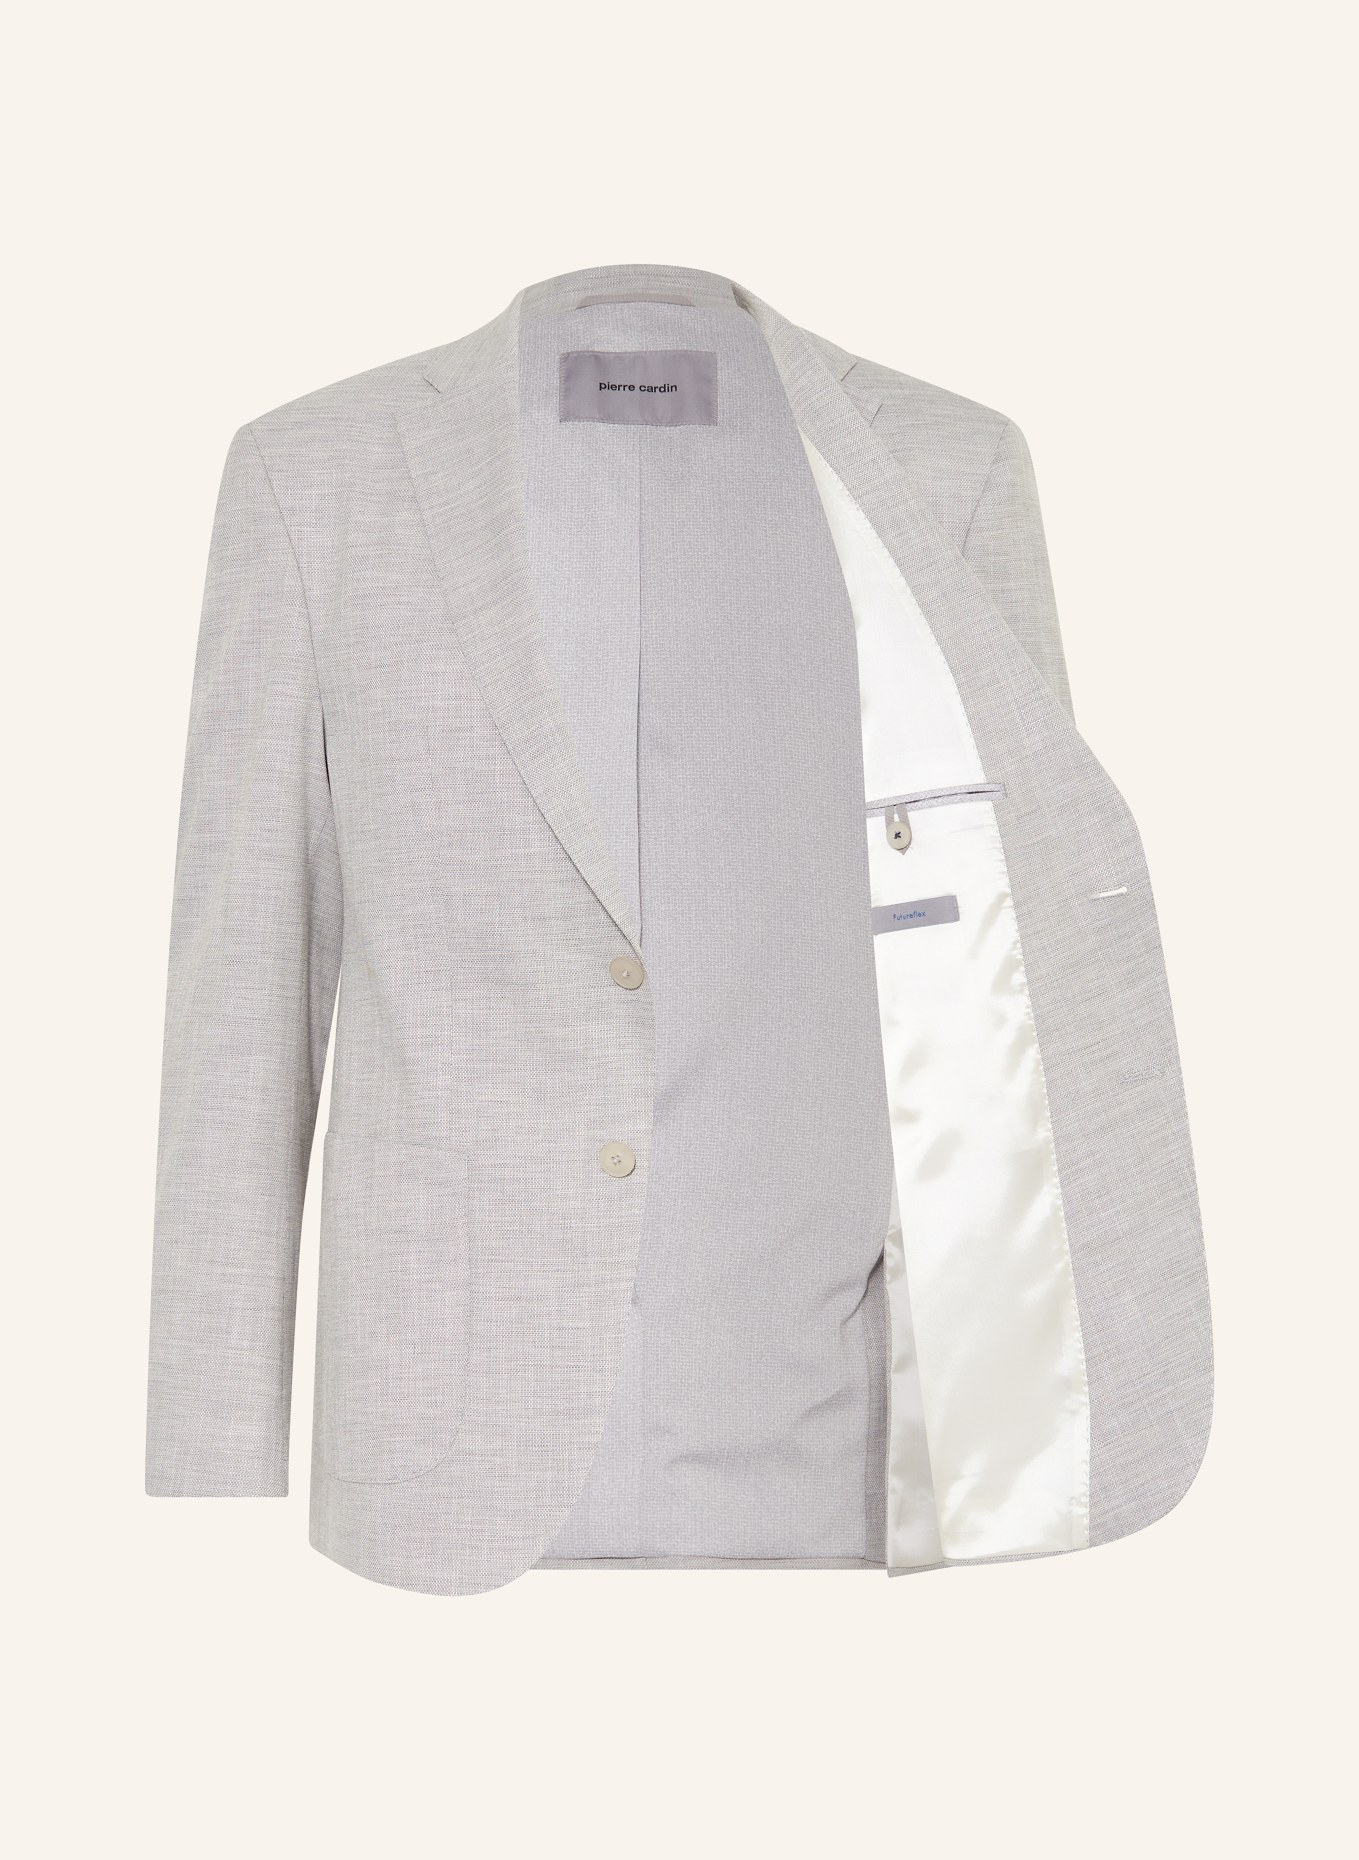 pierre cardin Suit jacket MICHEL regular fit, Color: LIGHT GRAY (Image 4)